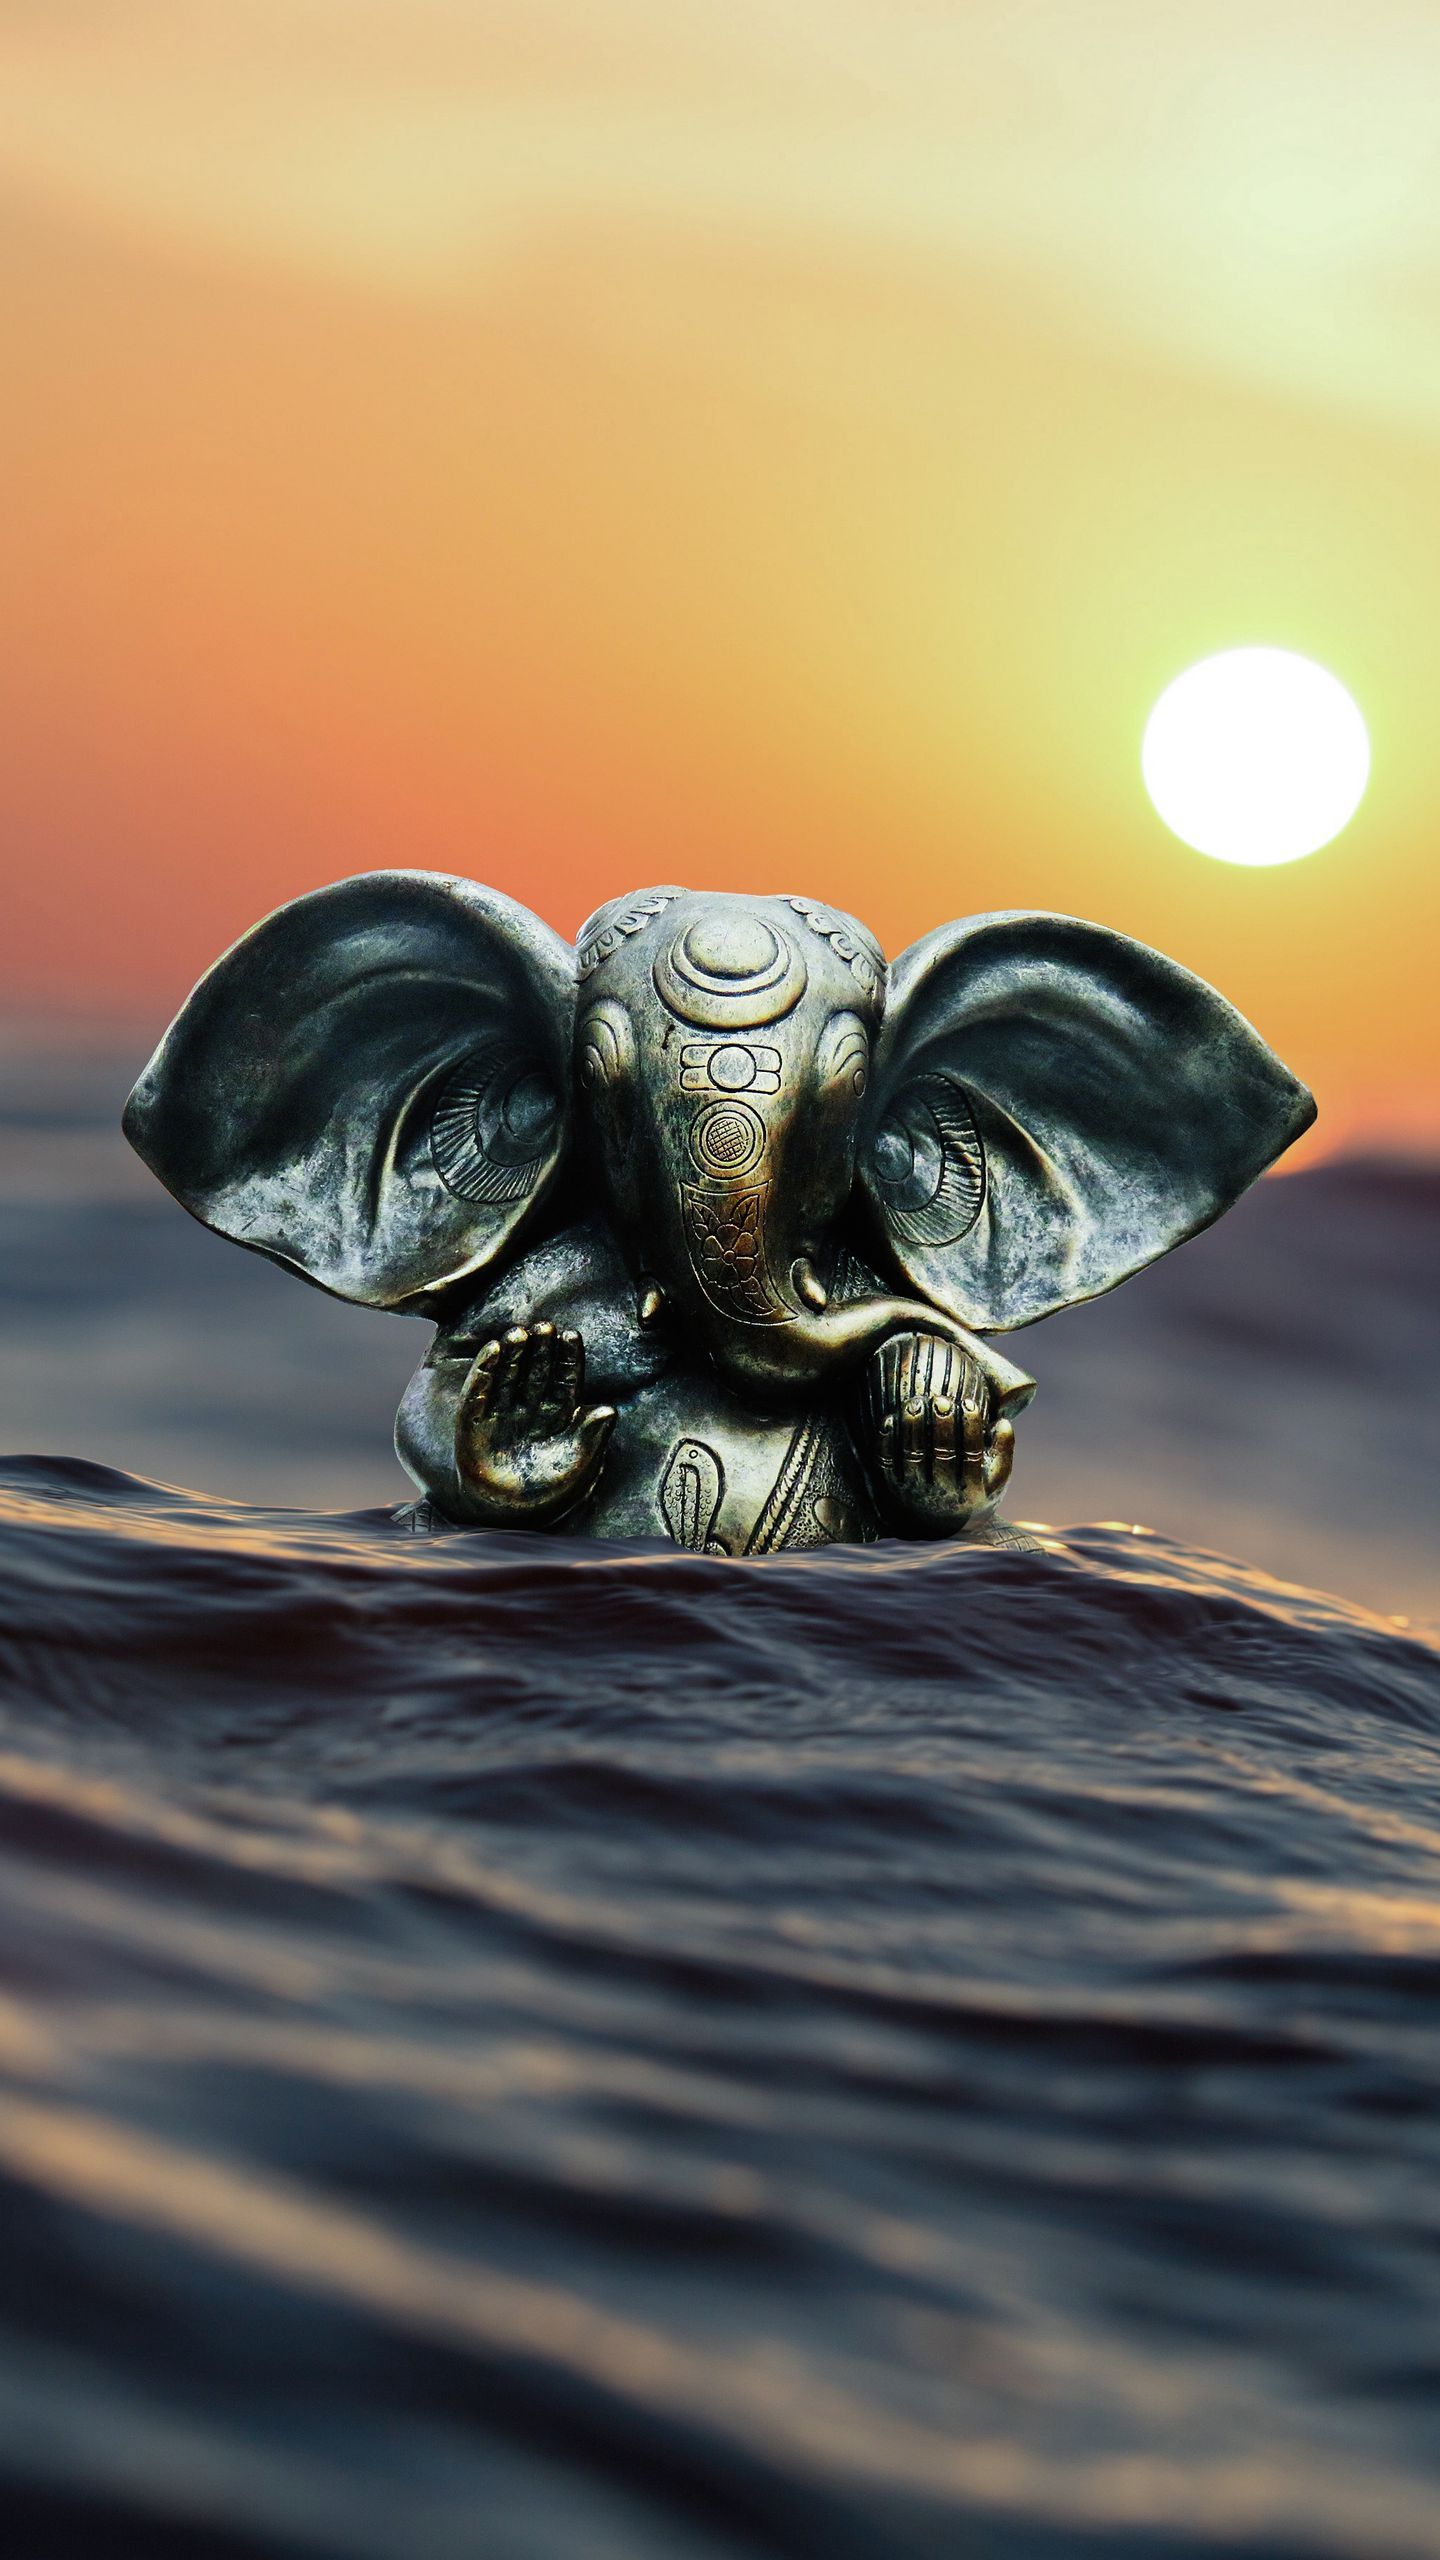 Download wallpaper 1440x2560 ganesha, elephant, hinduism, figurine